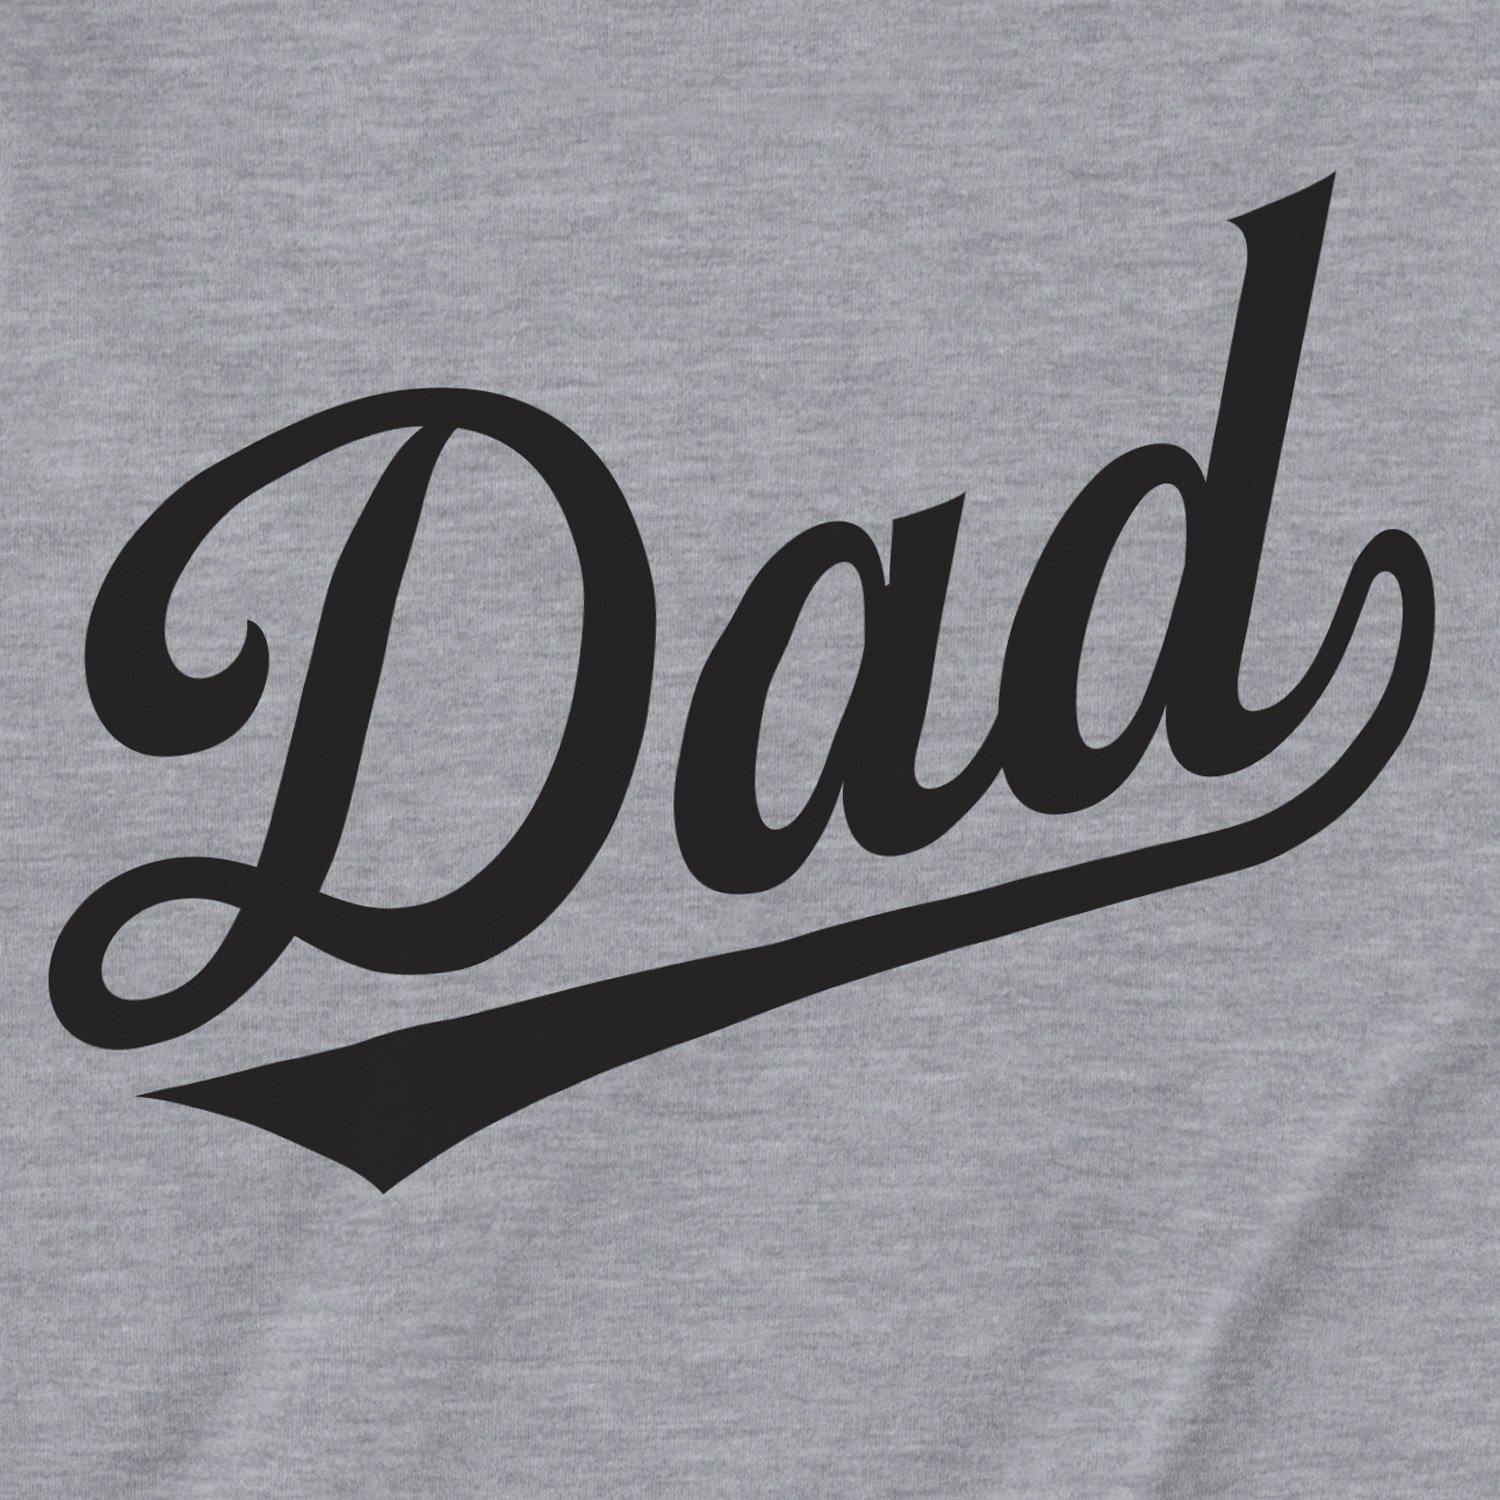 Dad | T-Shirt - Jomboy Media